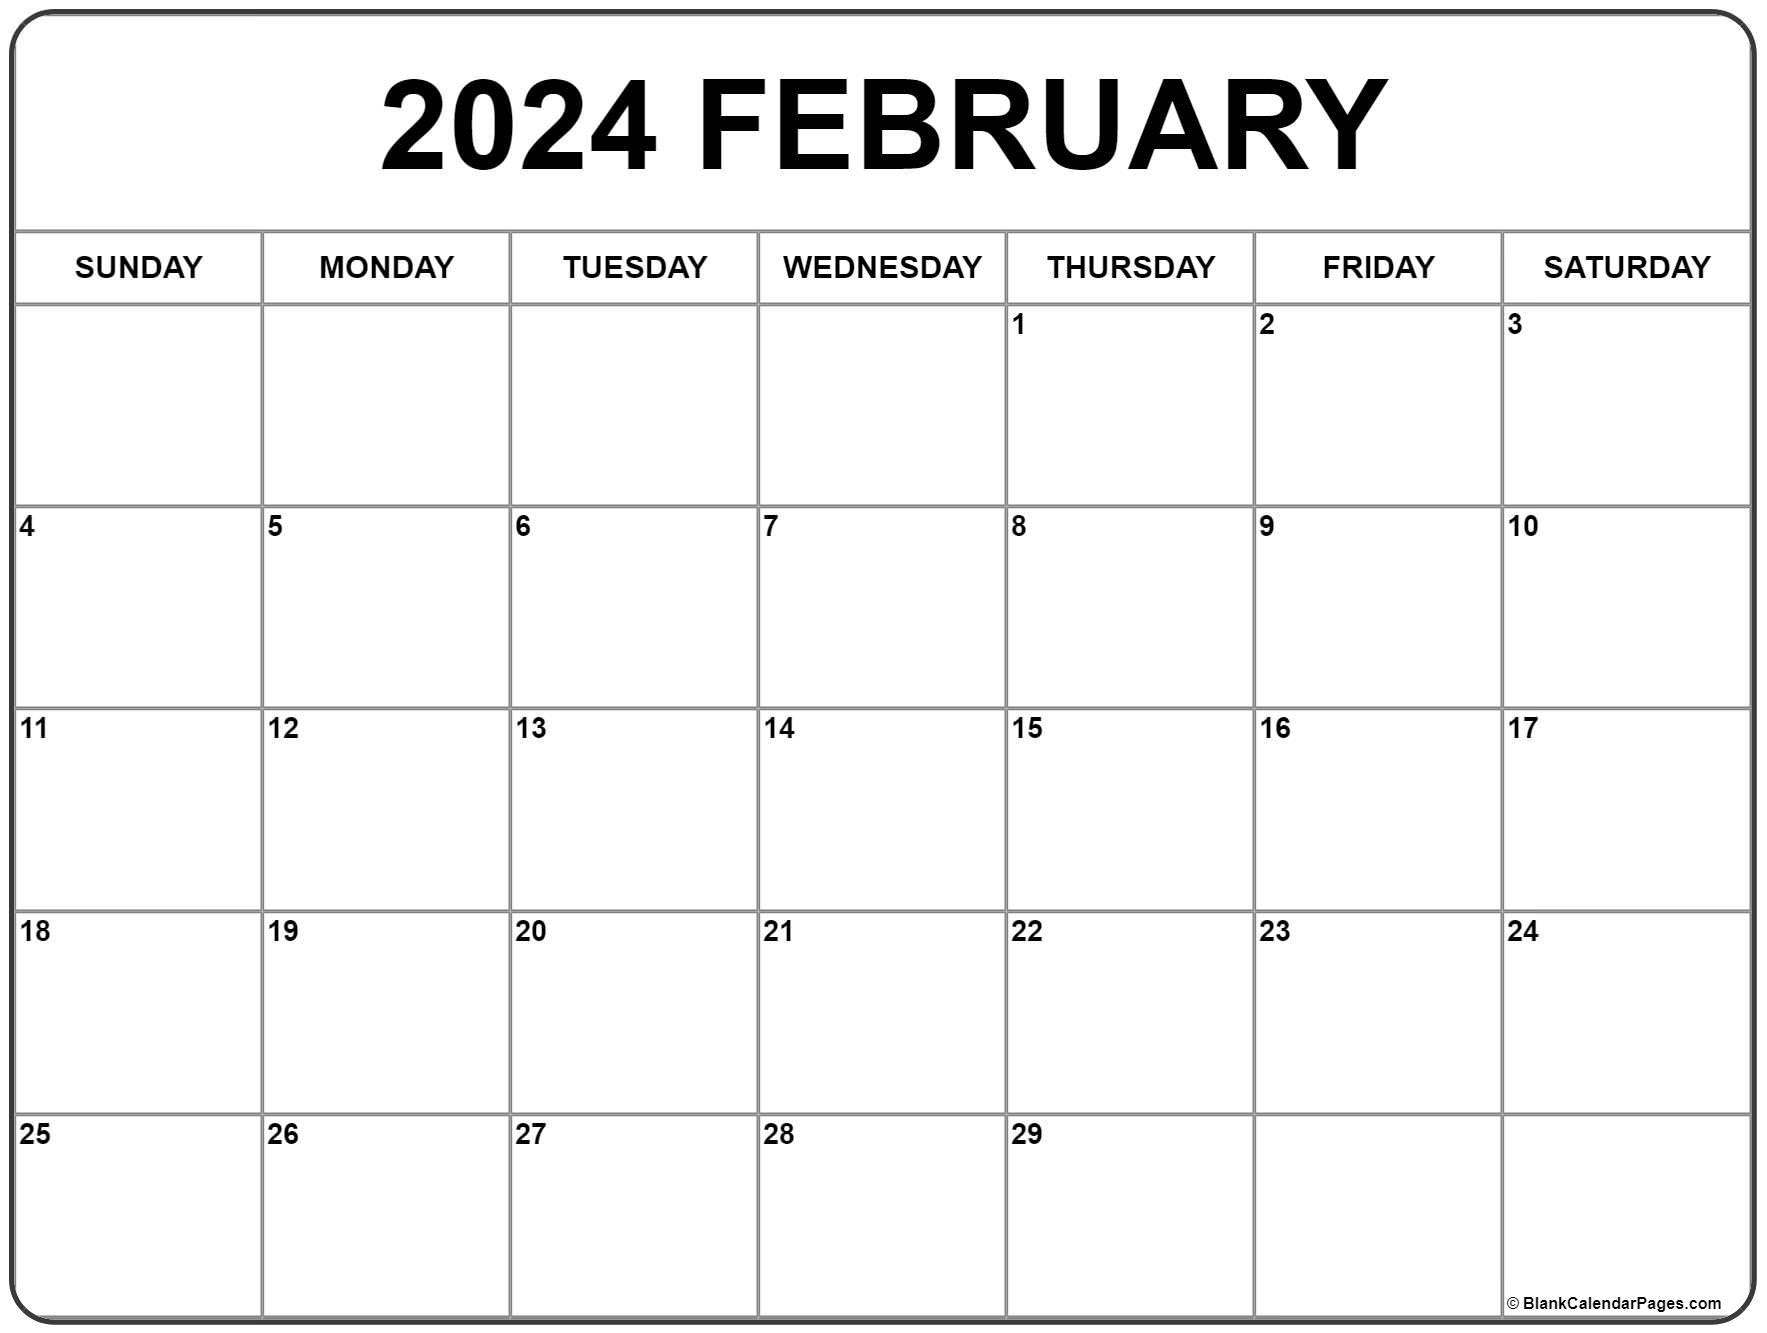 February 2021 calendar | free printable monthly calendars